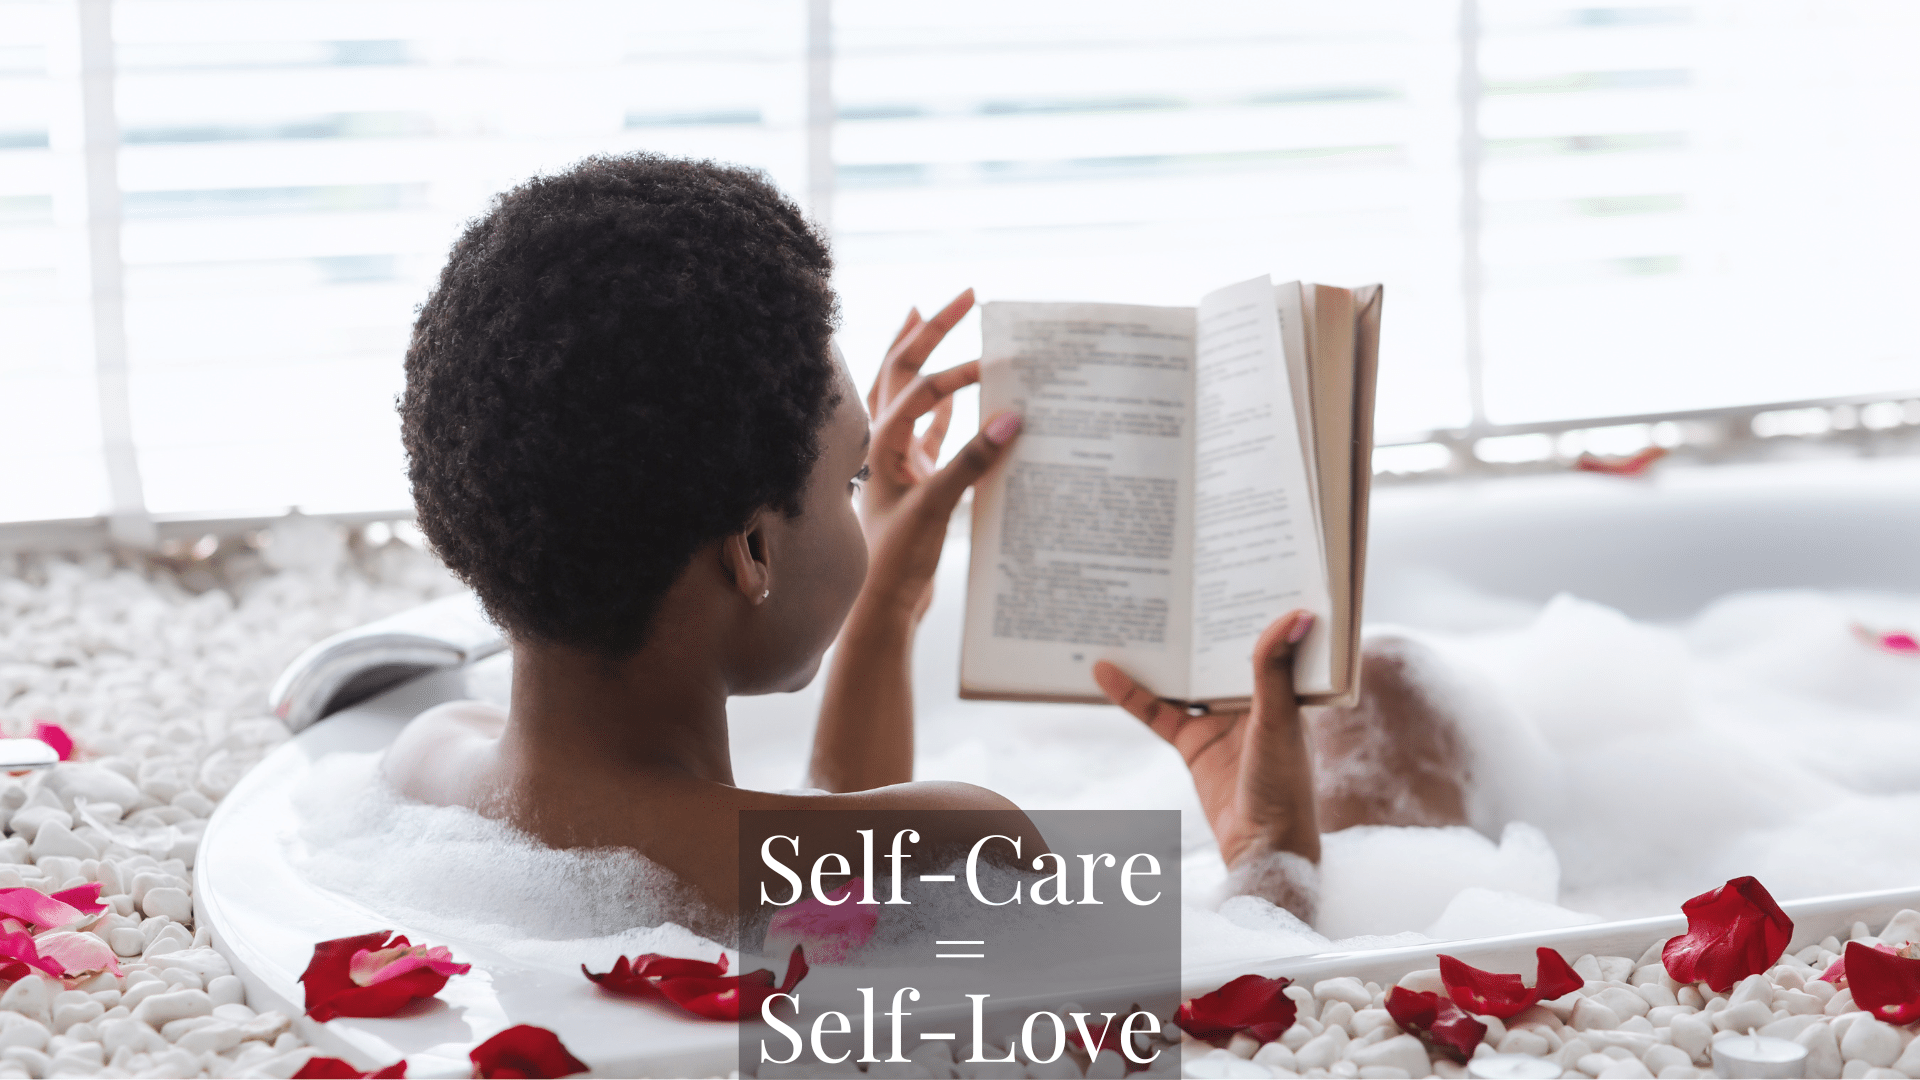 self-care is self-love